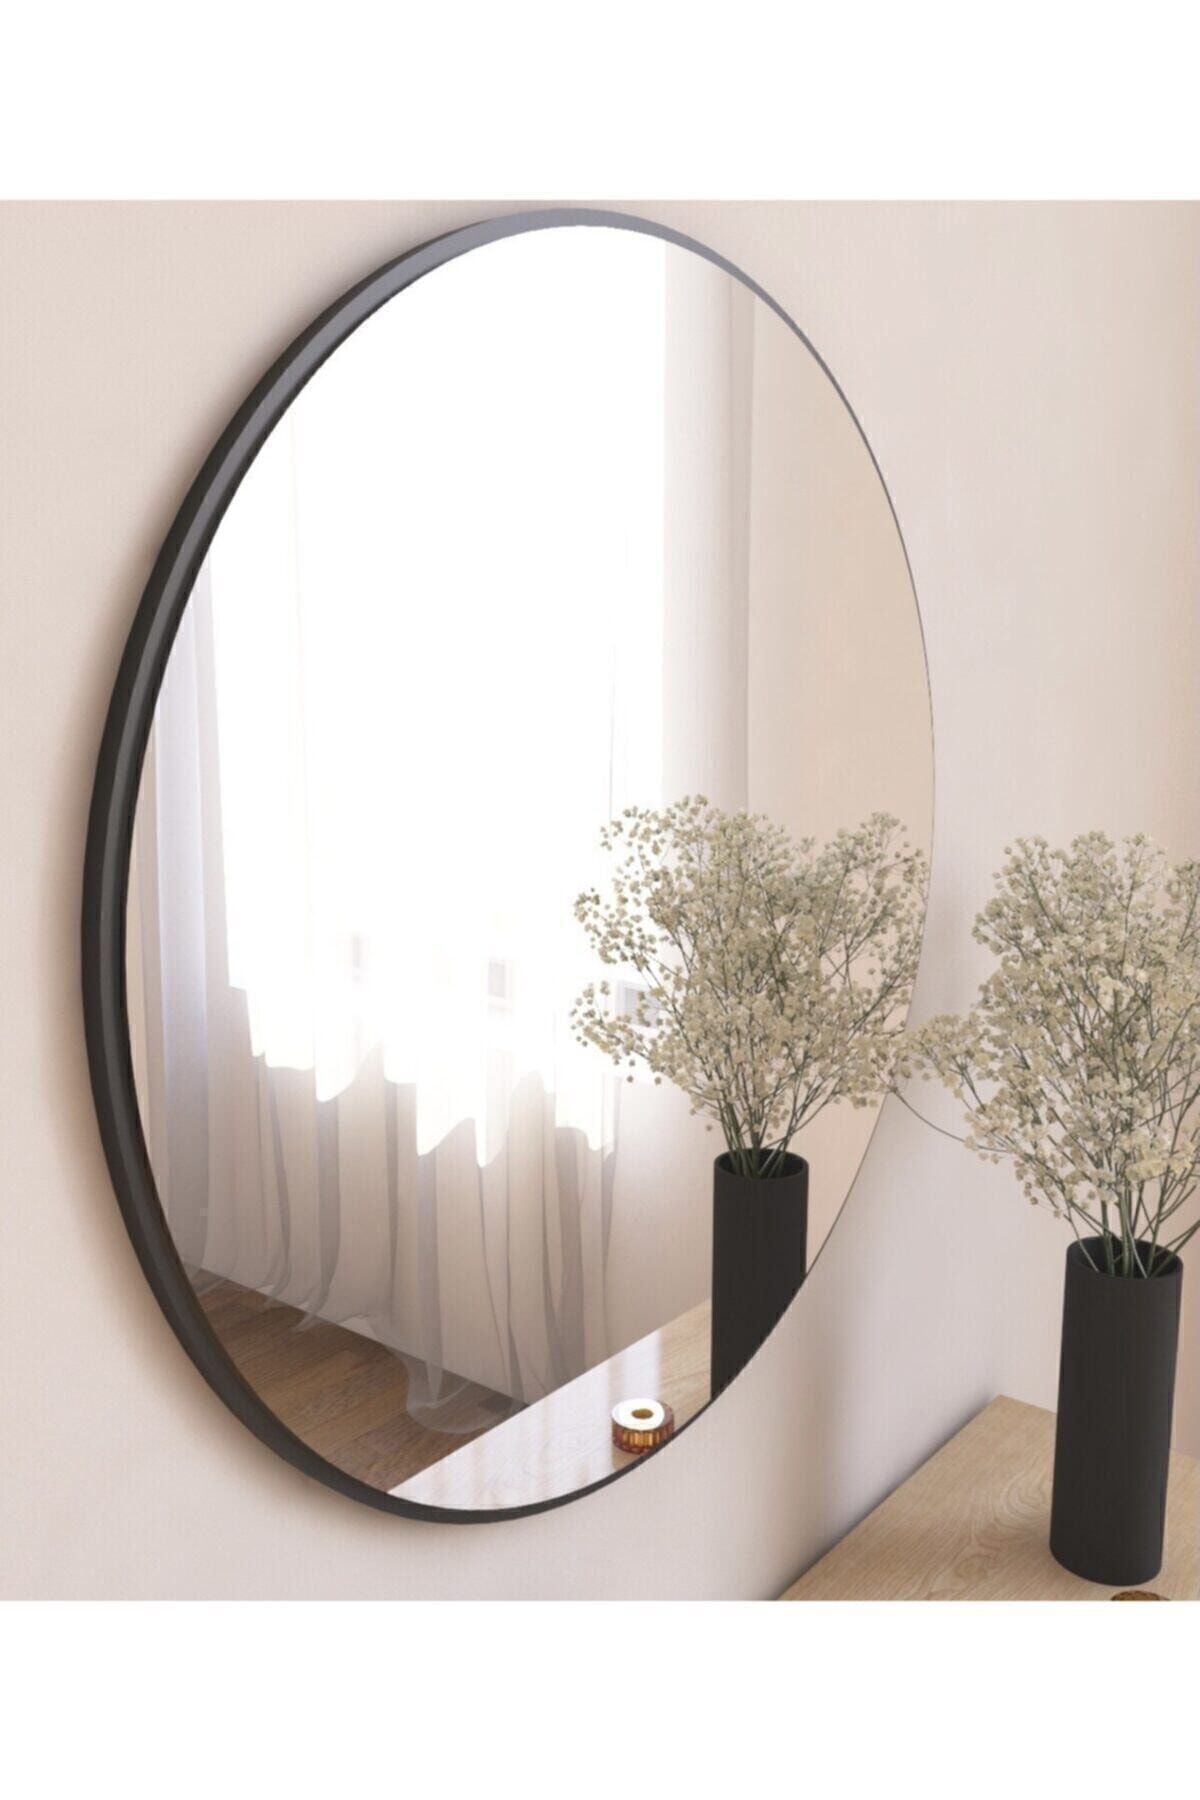 woodstore Siyah Dekoratif Yuvarlak Antre Hol Koridor Duvar Salon Mutfak Banyo Wc Ofis Aynası 60 Cm